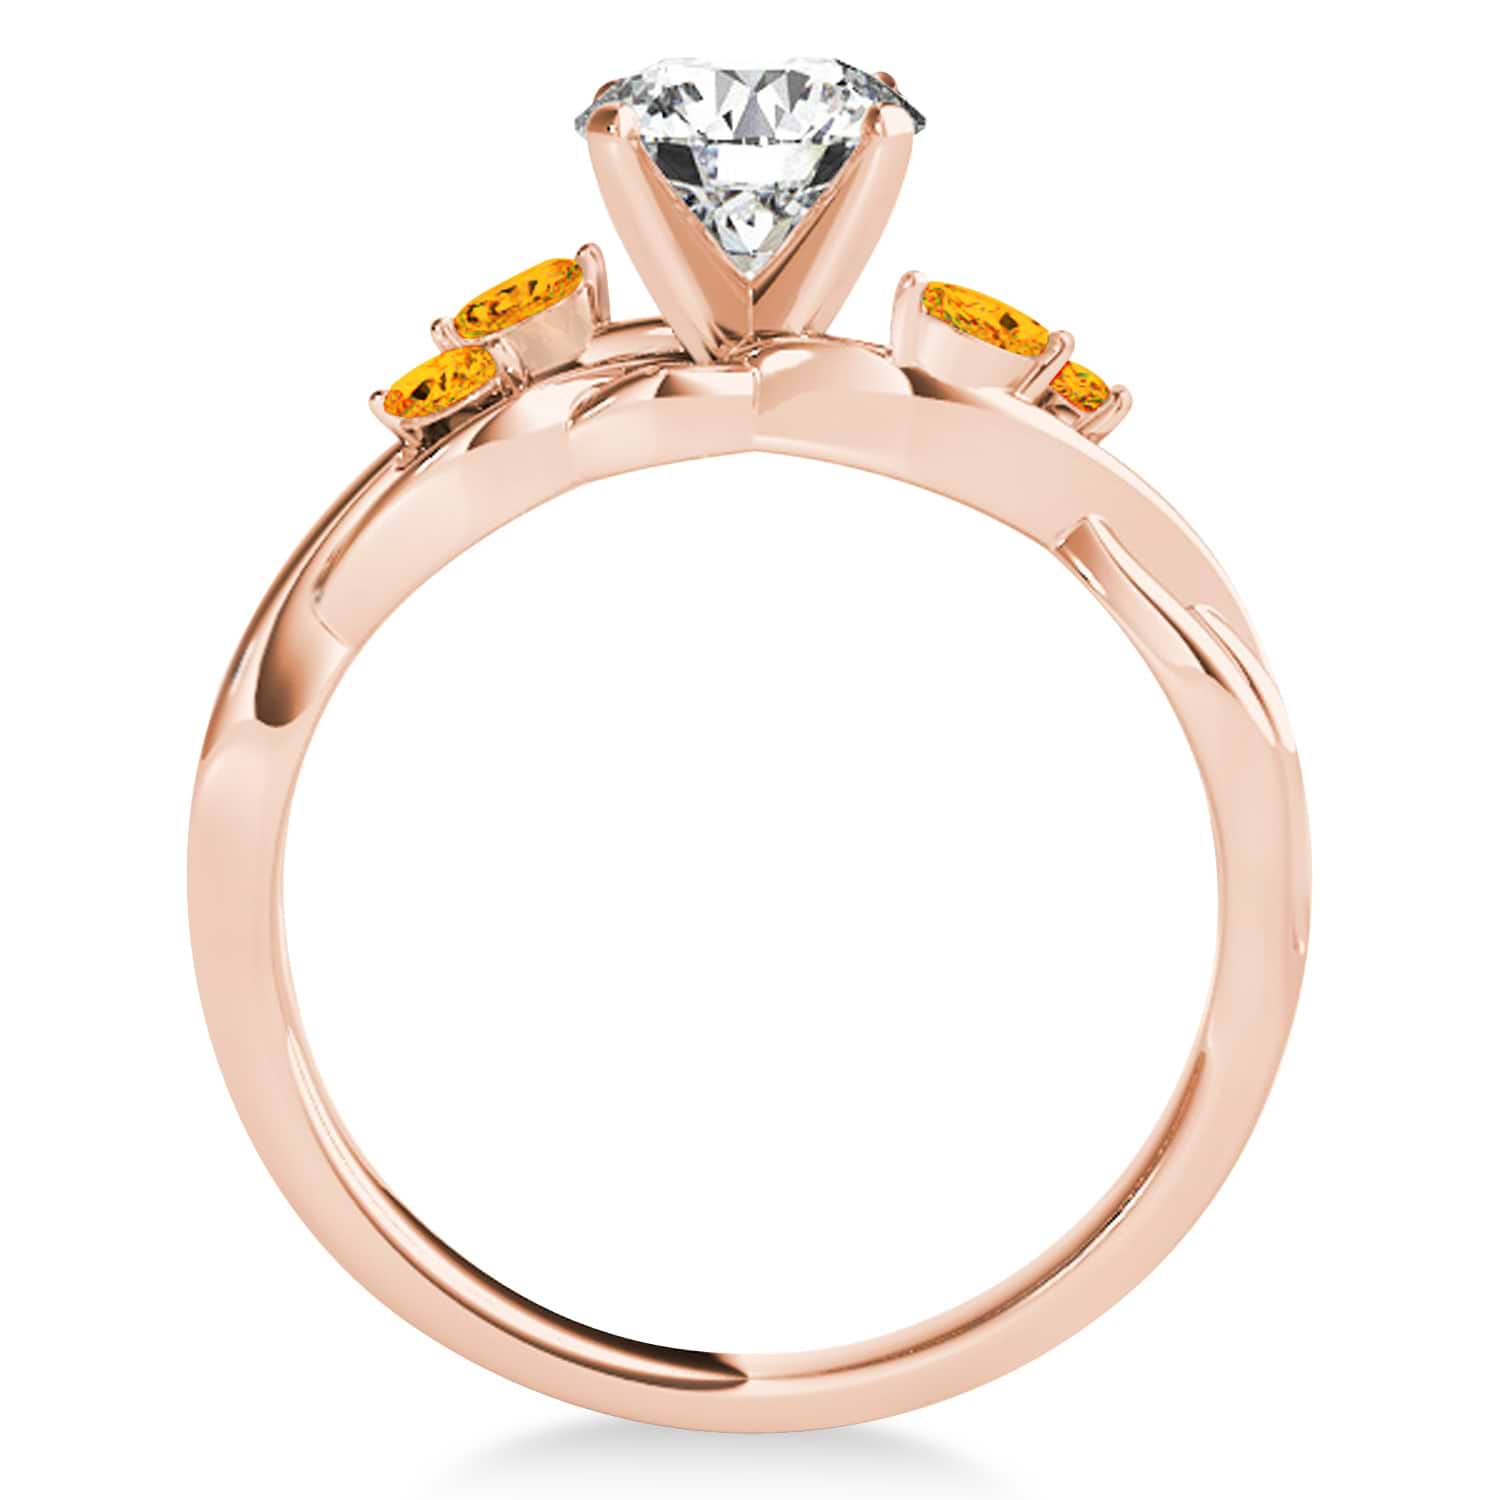 Citrine Marquise Vine Leaf Engagement Ring 14k Rose Gold (0.20ct)